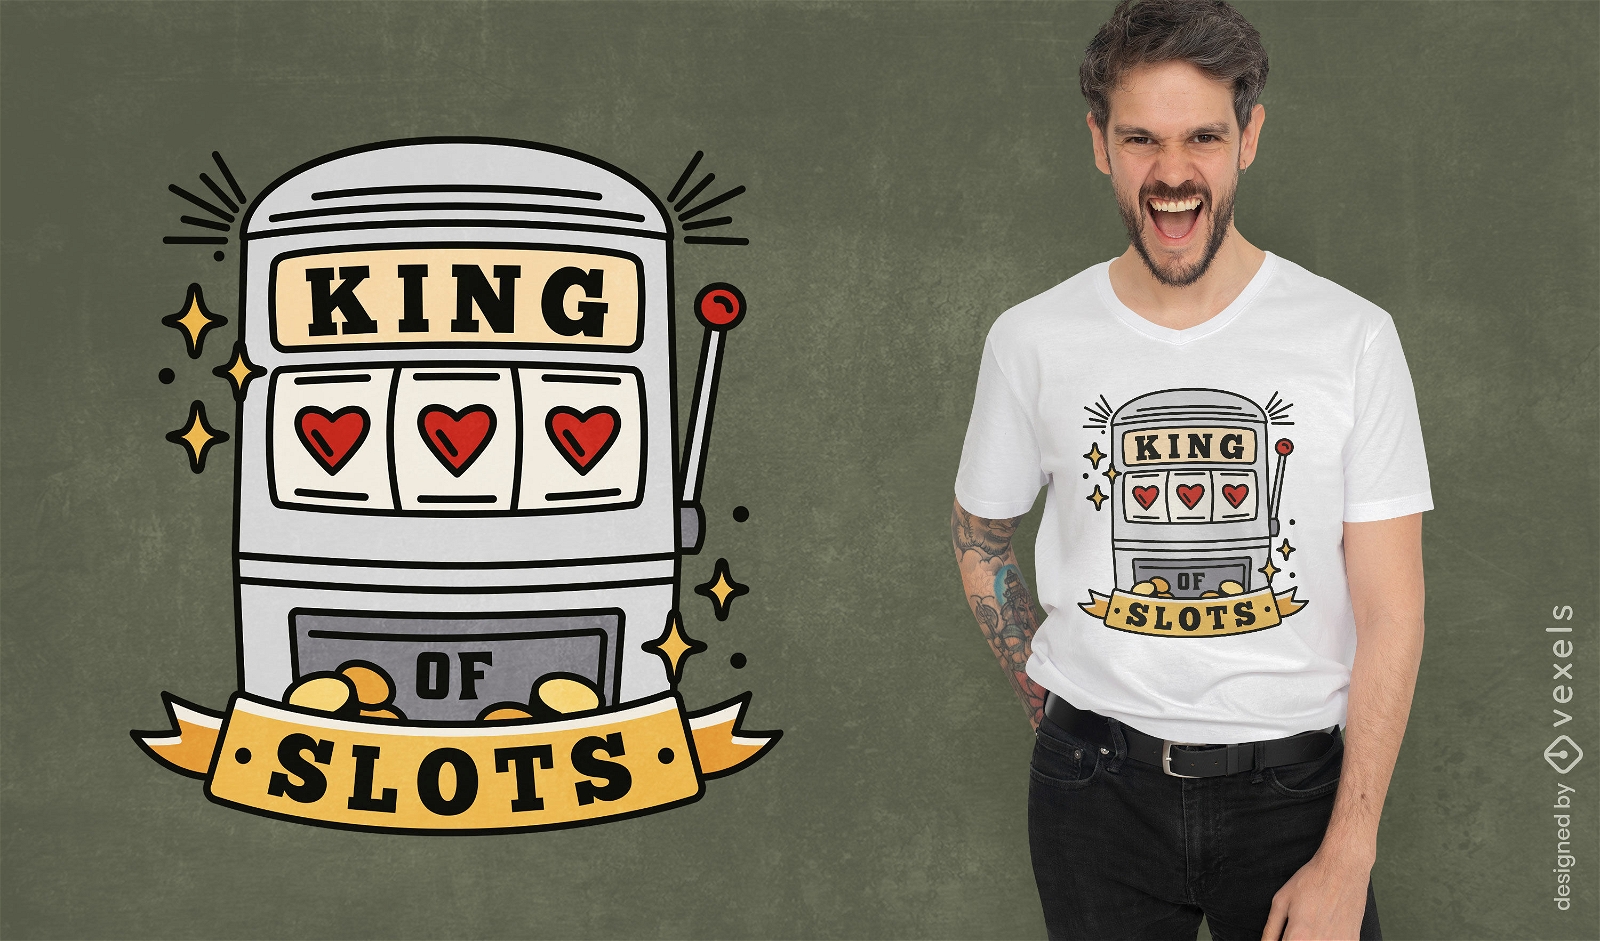 King of slots t - shirt design